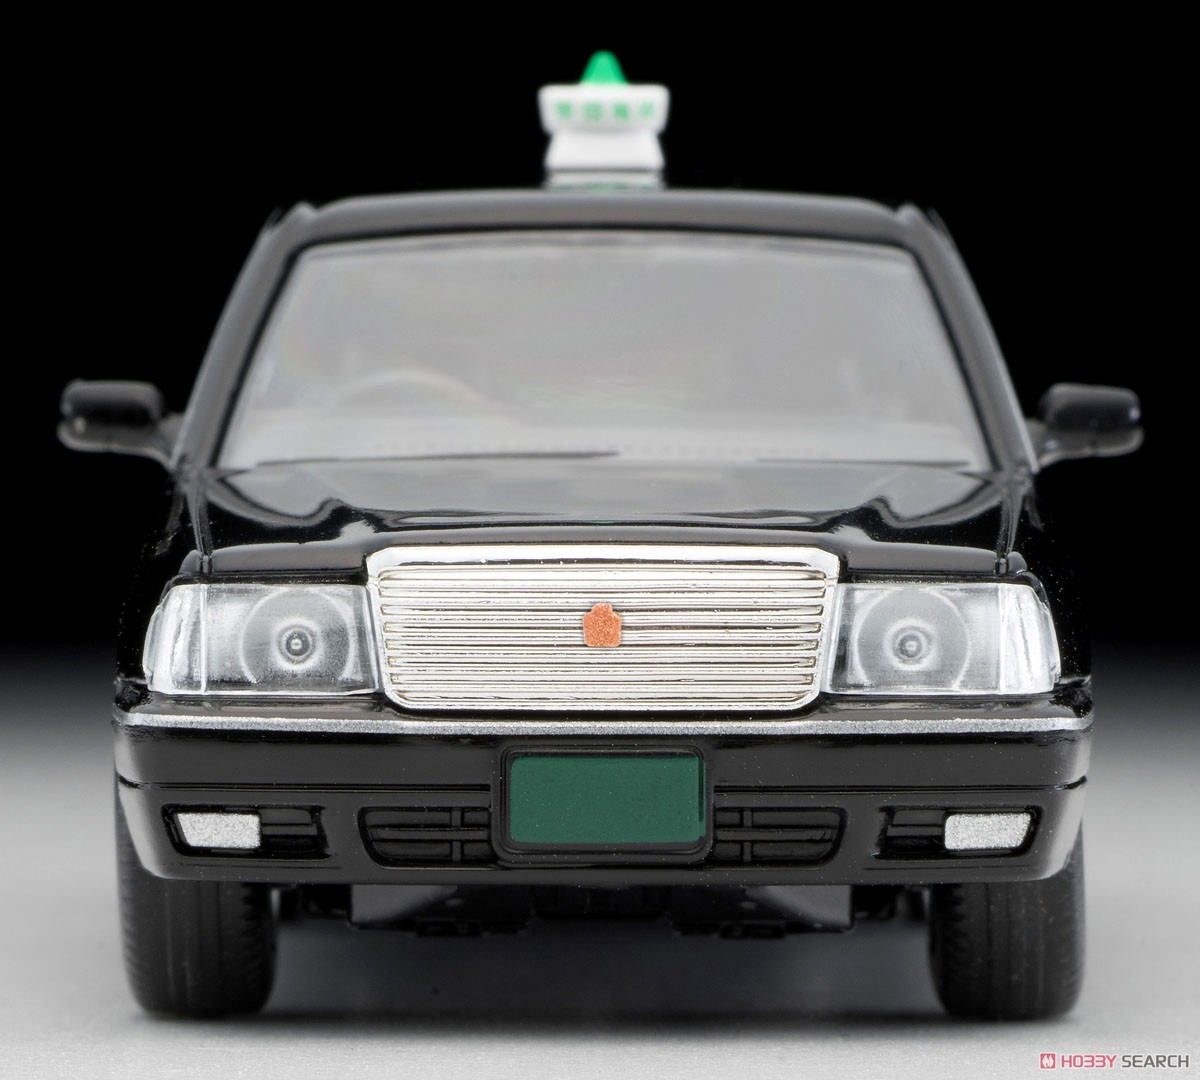 TLV-N219a トヨタ クラウンセダン 東京無線タクシー (黒) (ミニカー) 商品画像5